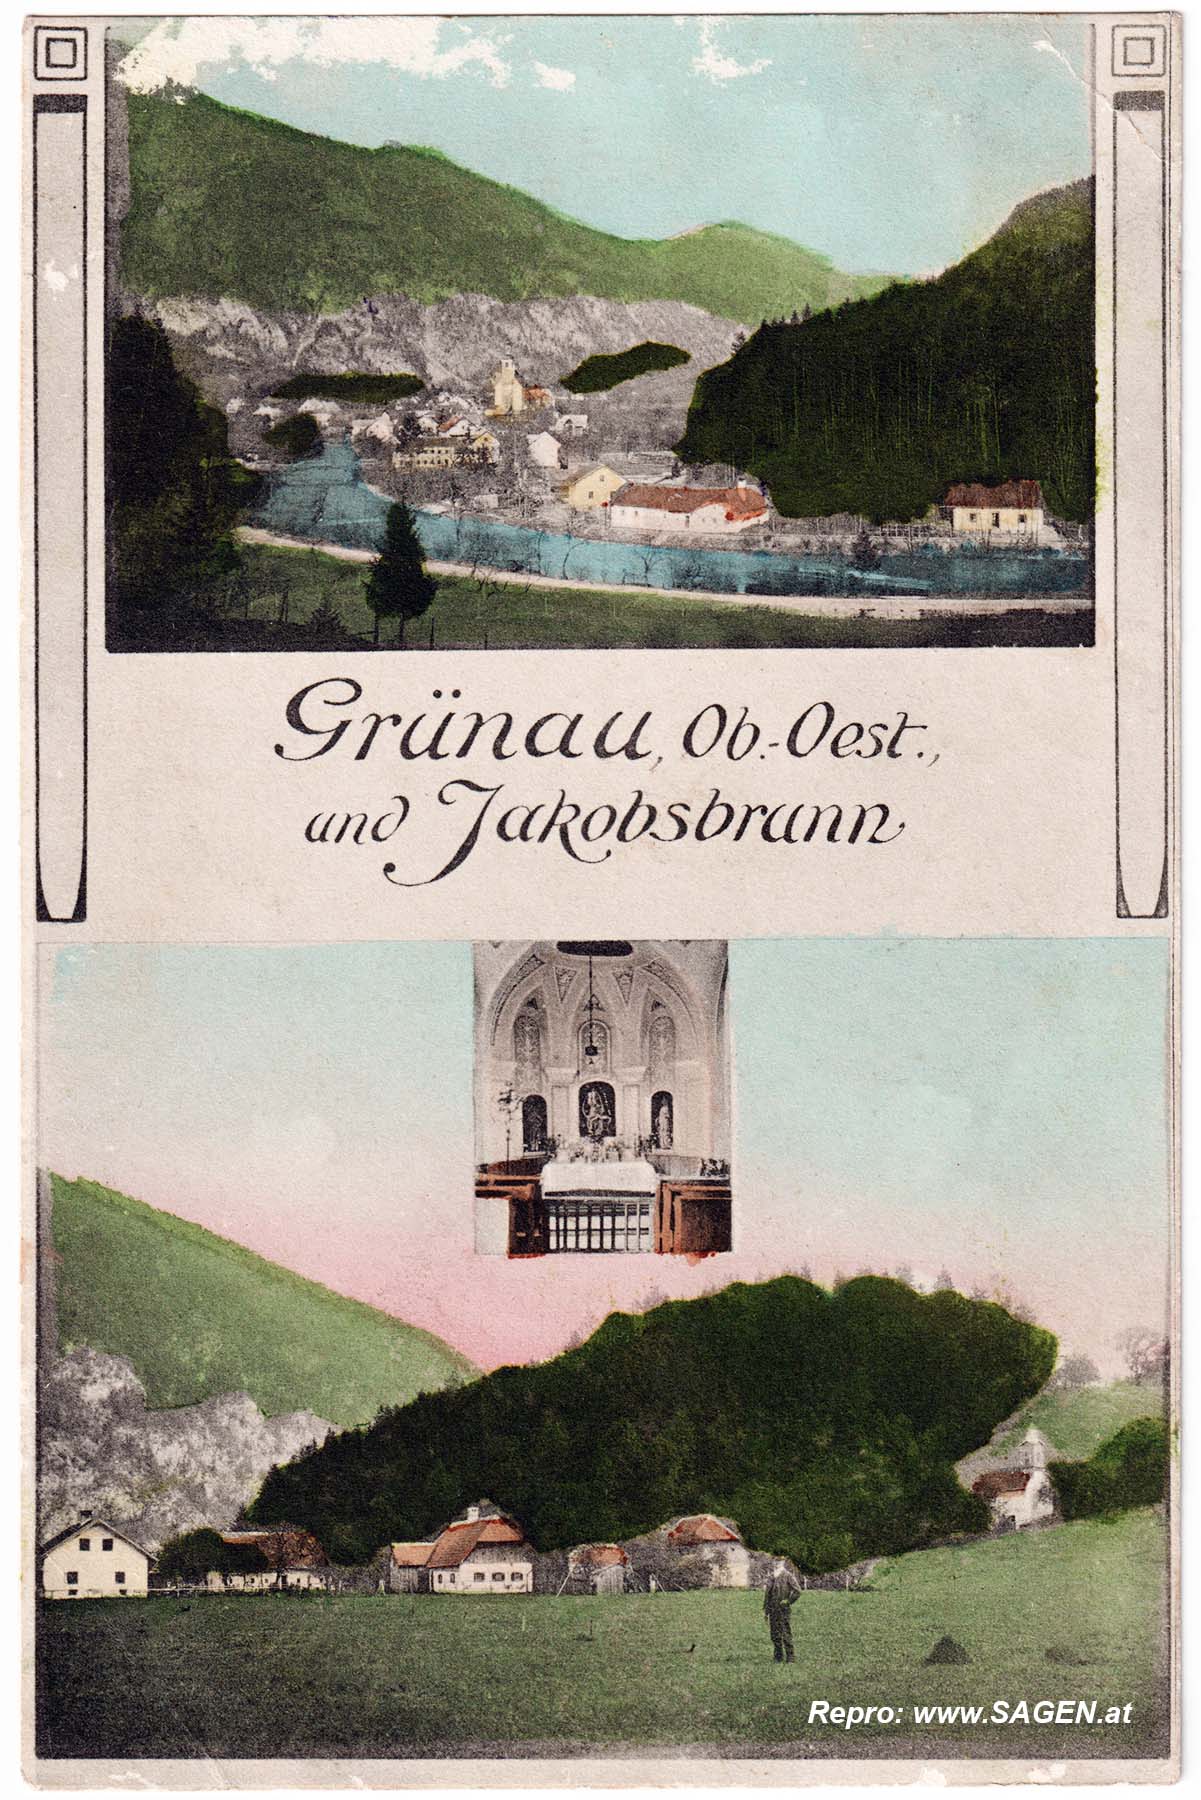 Grünau im Almtal und Jakobsbrunn um 1920